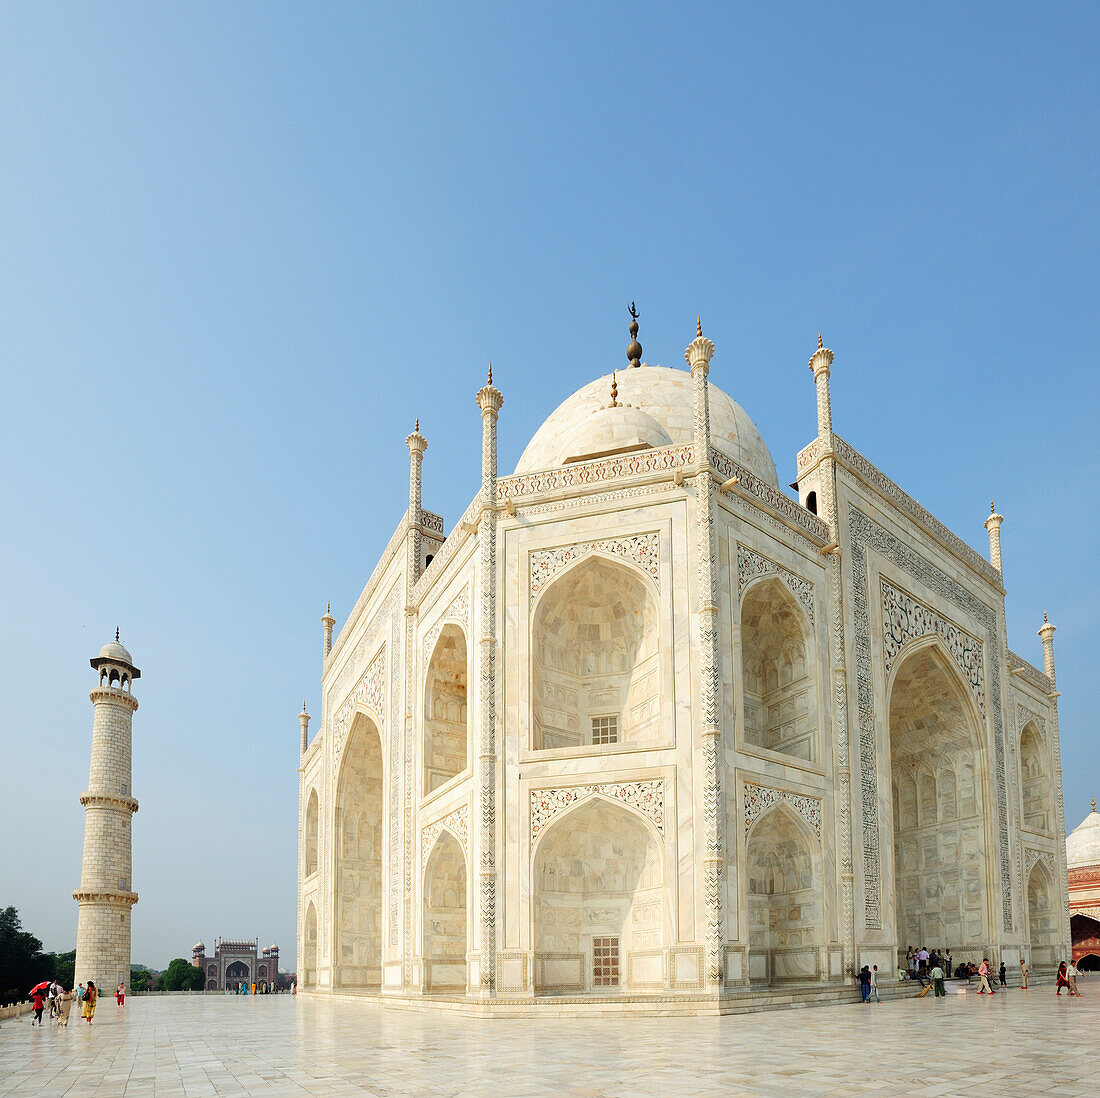 Taj Mahal, UNESCO World Heritage Site, Agra, Uttar Pradesh, India